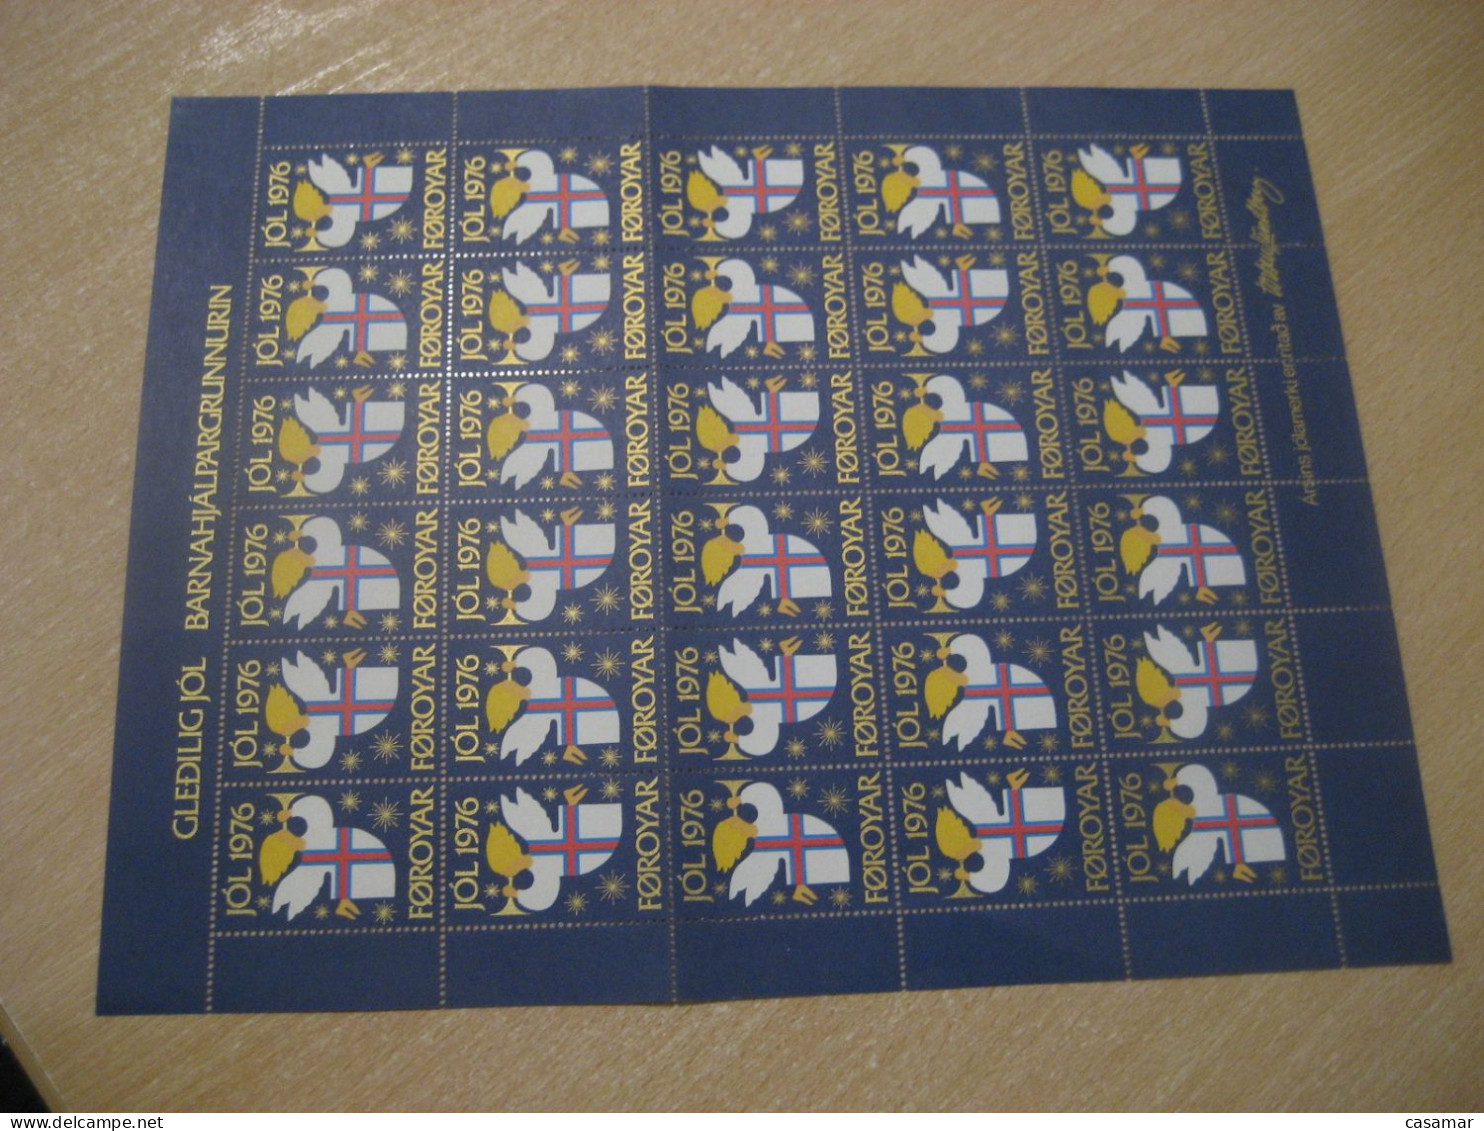 FAROE ISLANDS 1976 Flag Merry Christmas Sheet Bloc 30 Poster Stamp Vignette DENMARK Label Children Aid - Färöer Inseln